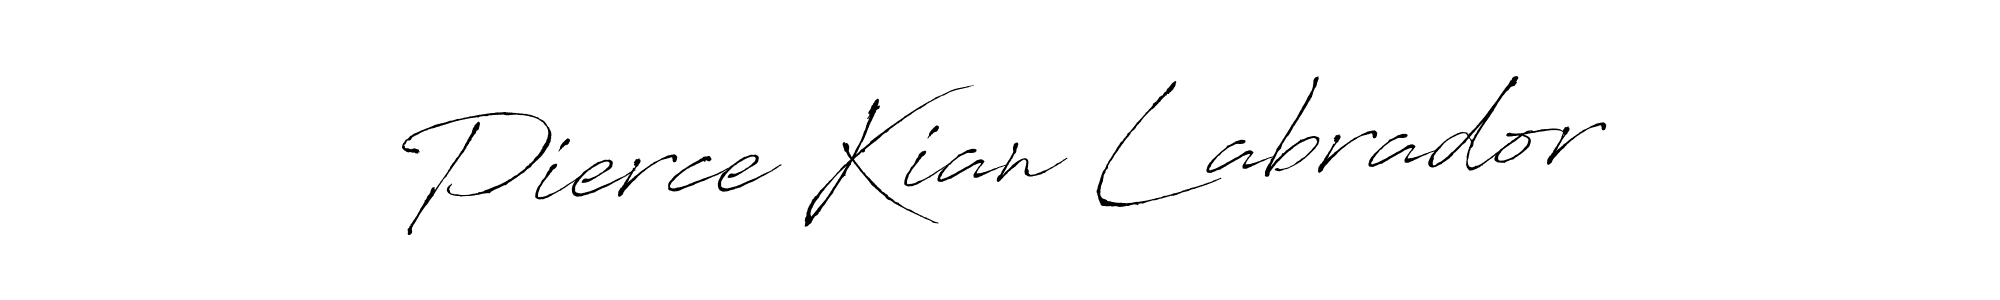 How to Draw Pierce Kian Labrador signature style? Antro_Vectra is a latest design signature styles for name Pierce Kian Labrador. Pierce Kian Labrador signature style 6 images and pictures png